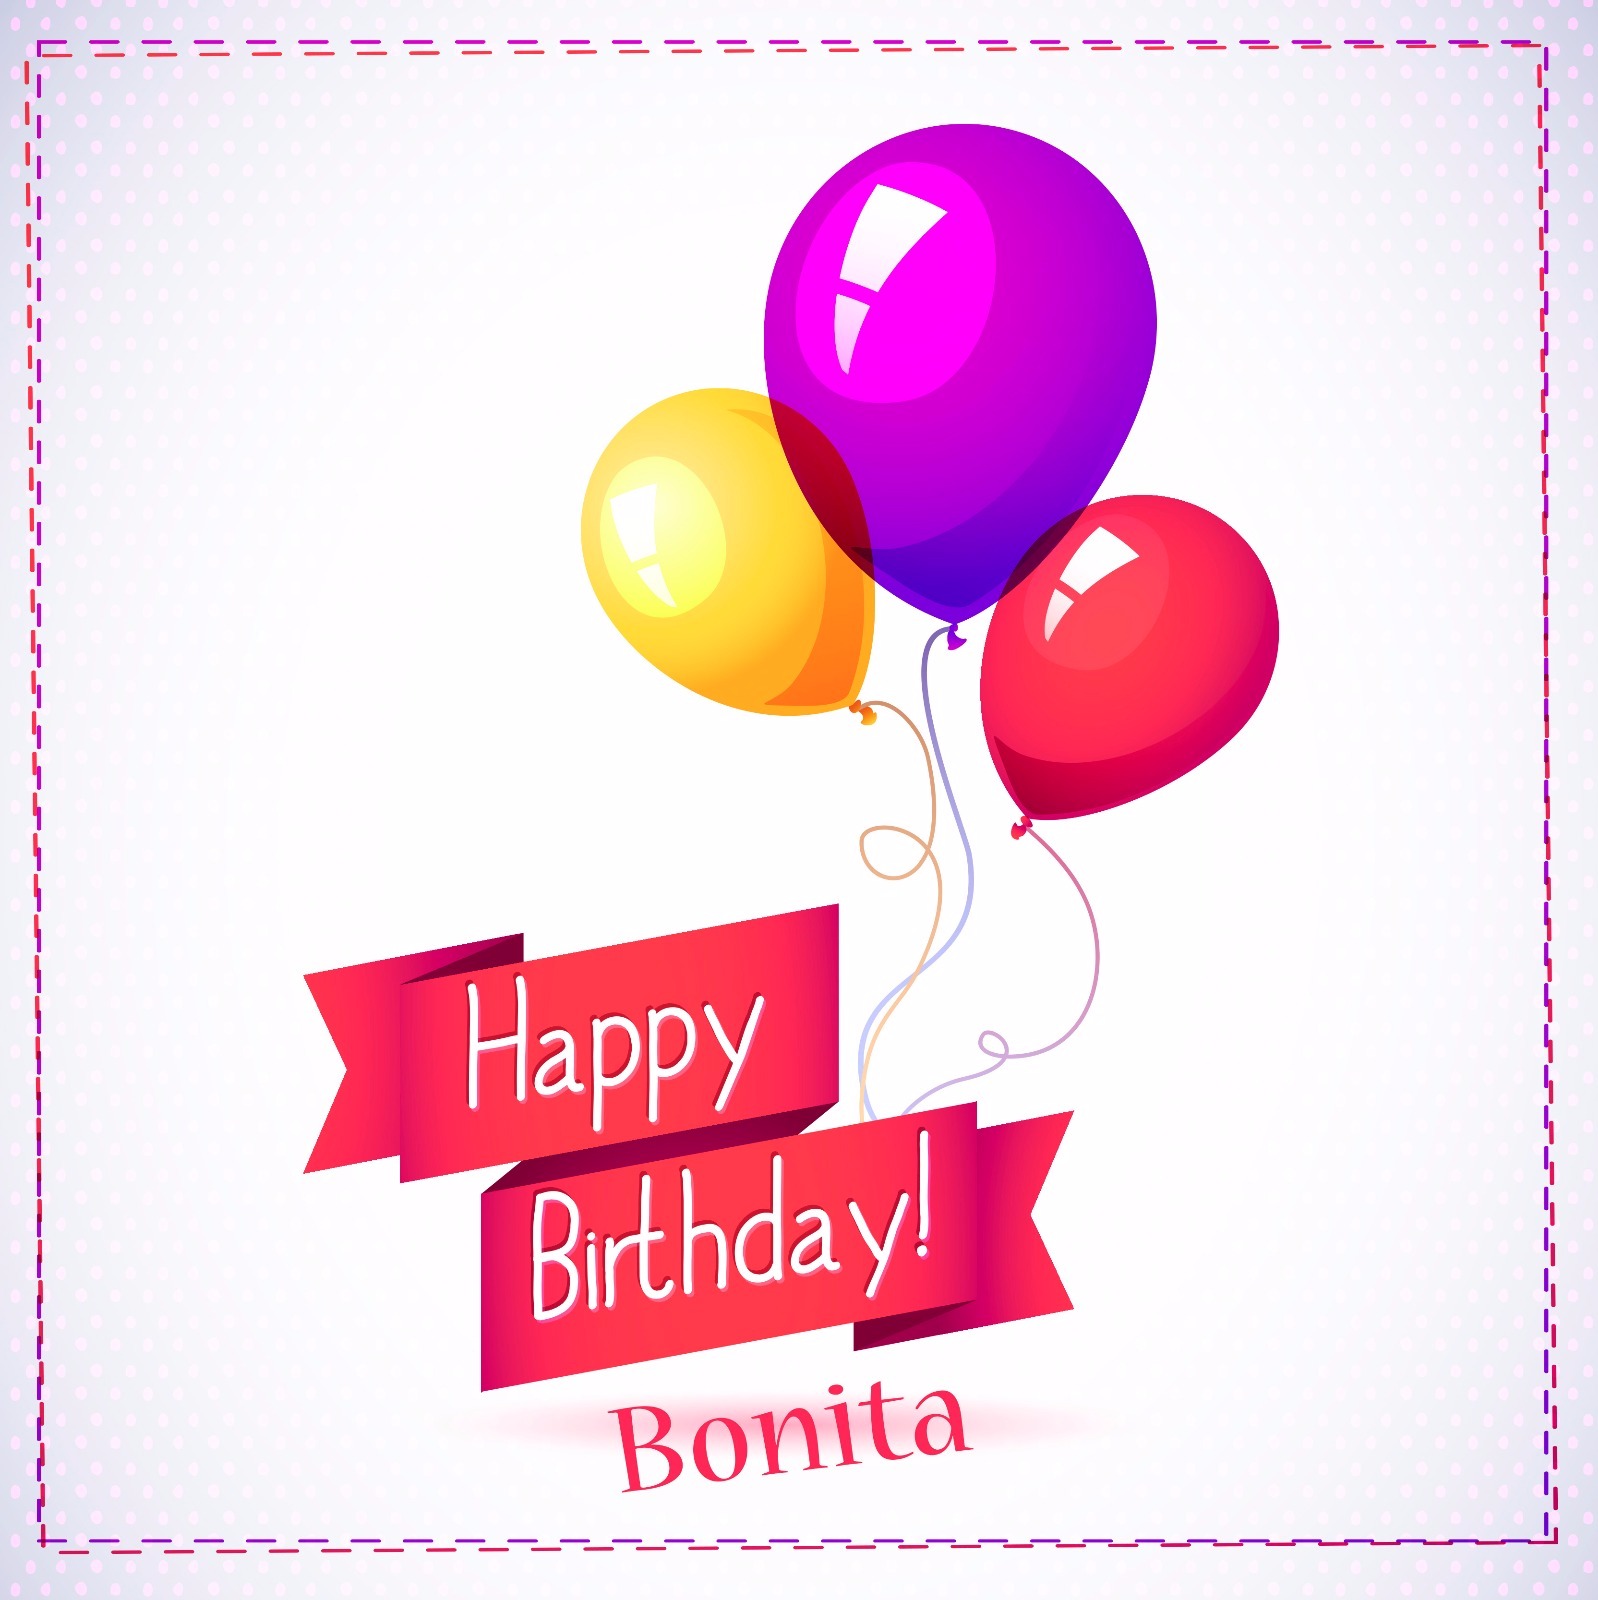 Happy Birthday Bonita!!